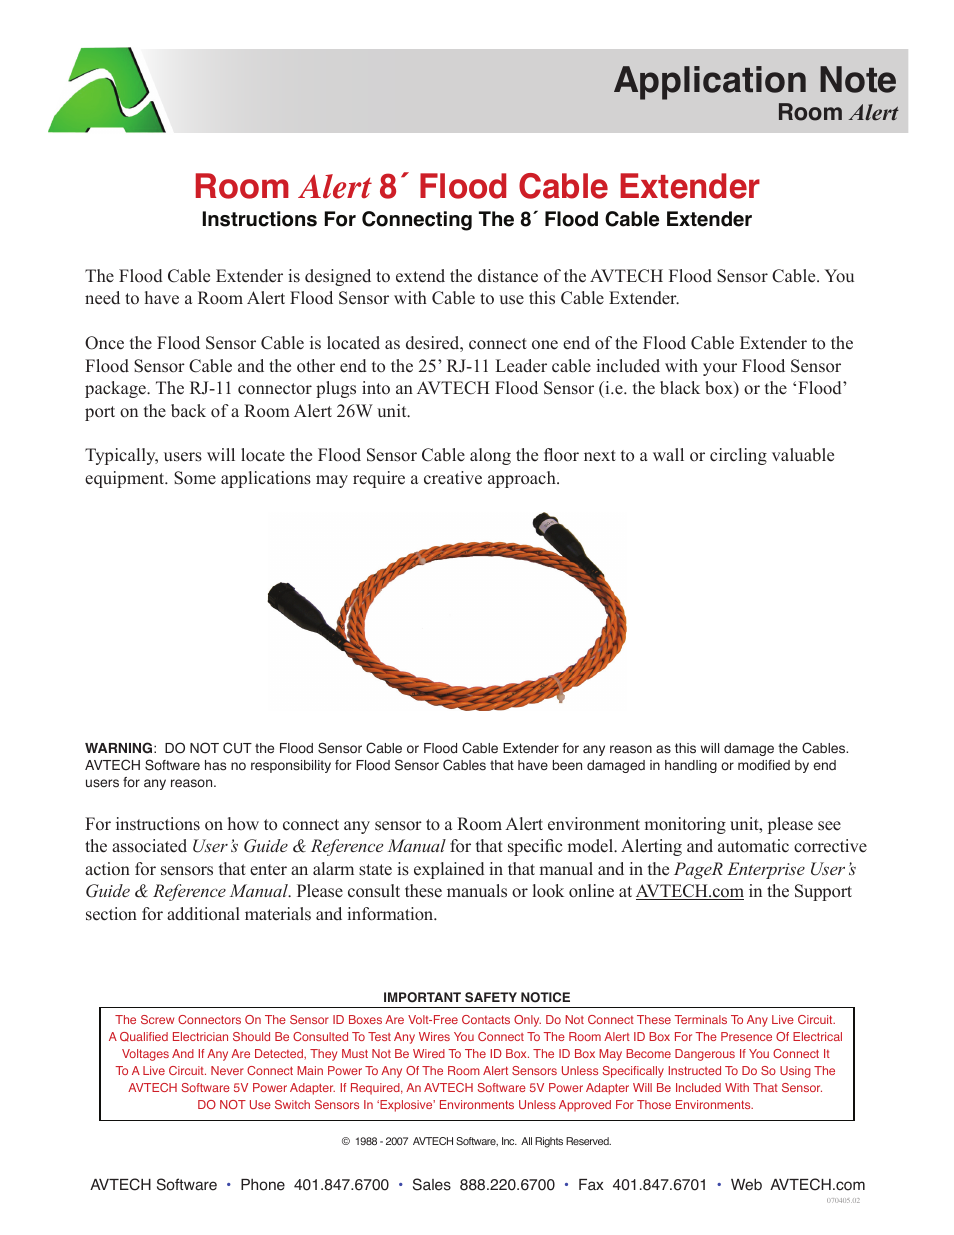 8 Flood Cable Extension (RMA-008CE-SEN)